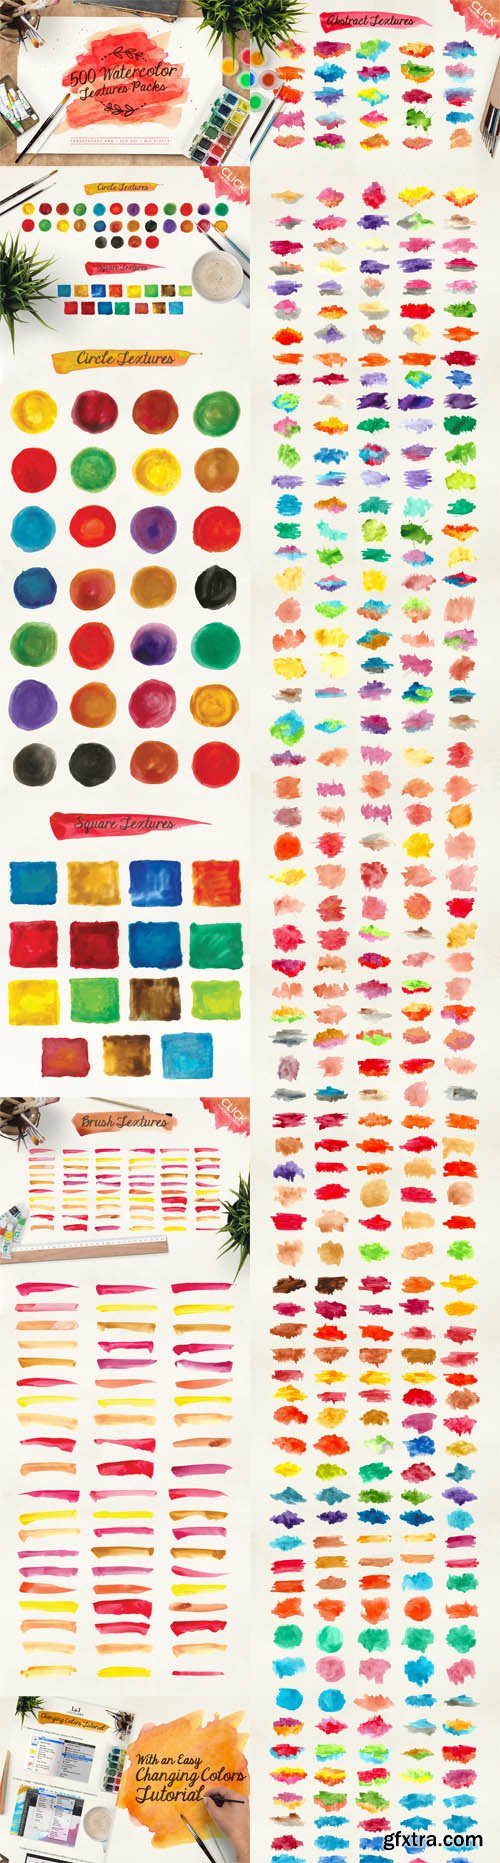 CreativeMarket - 500 Watercolor Textures Packs 110266